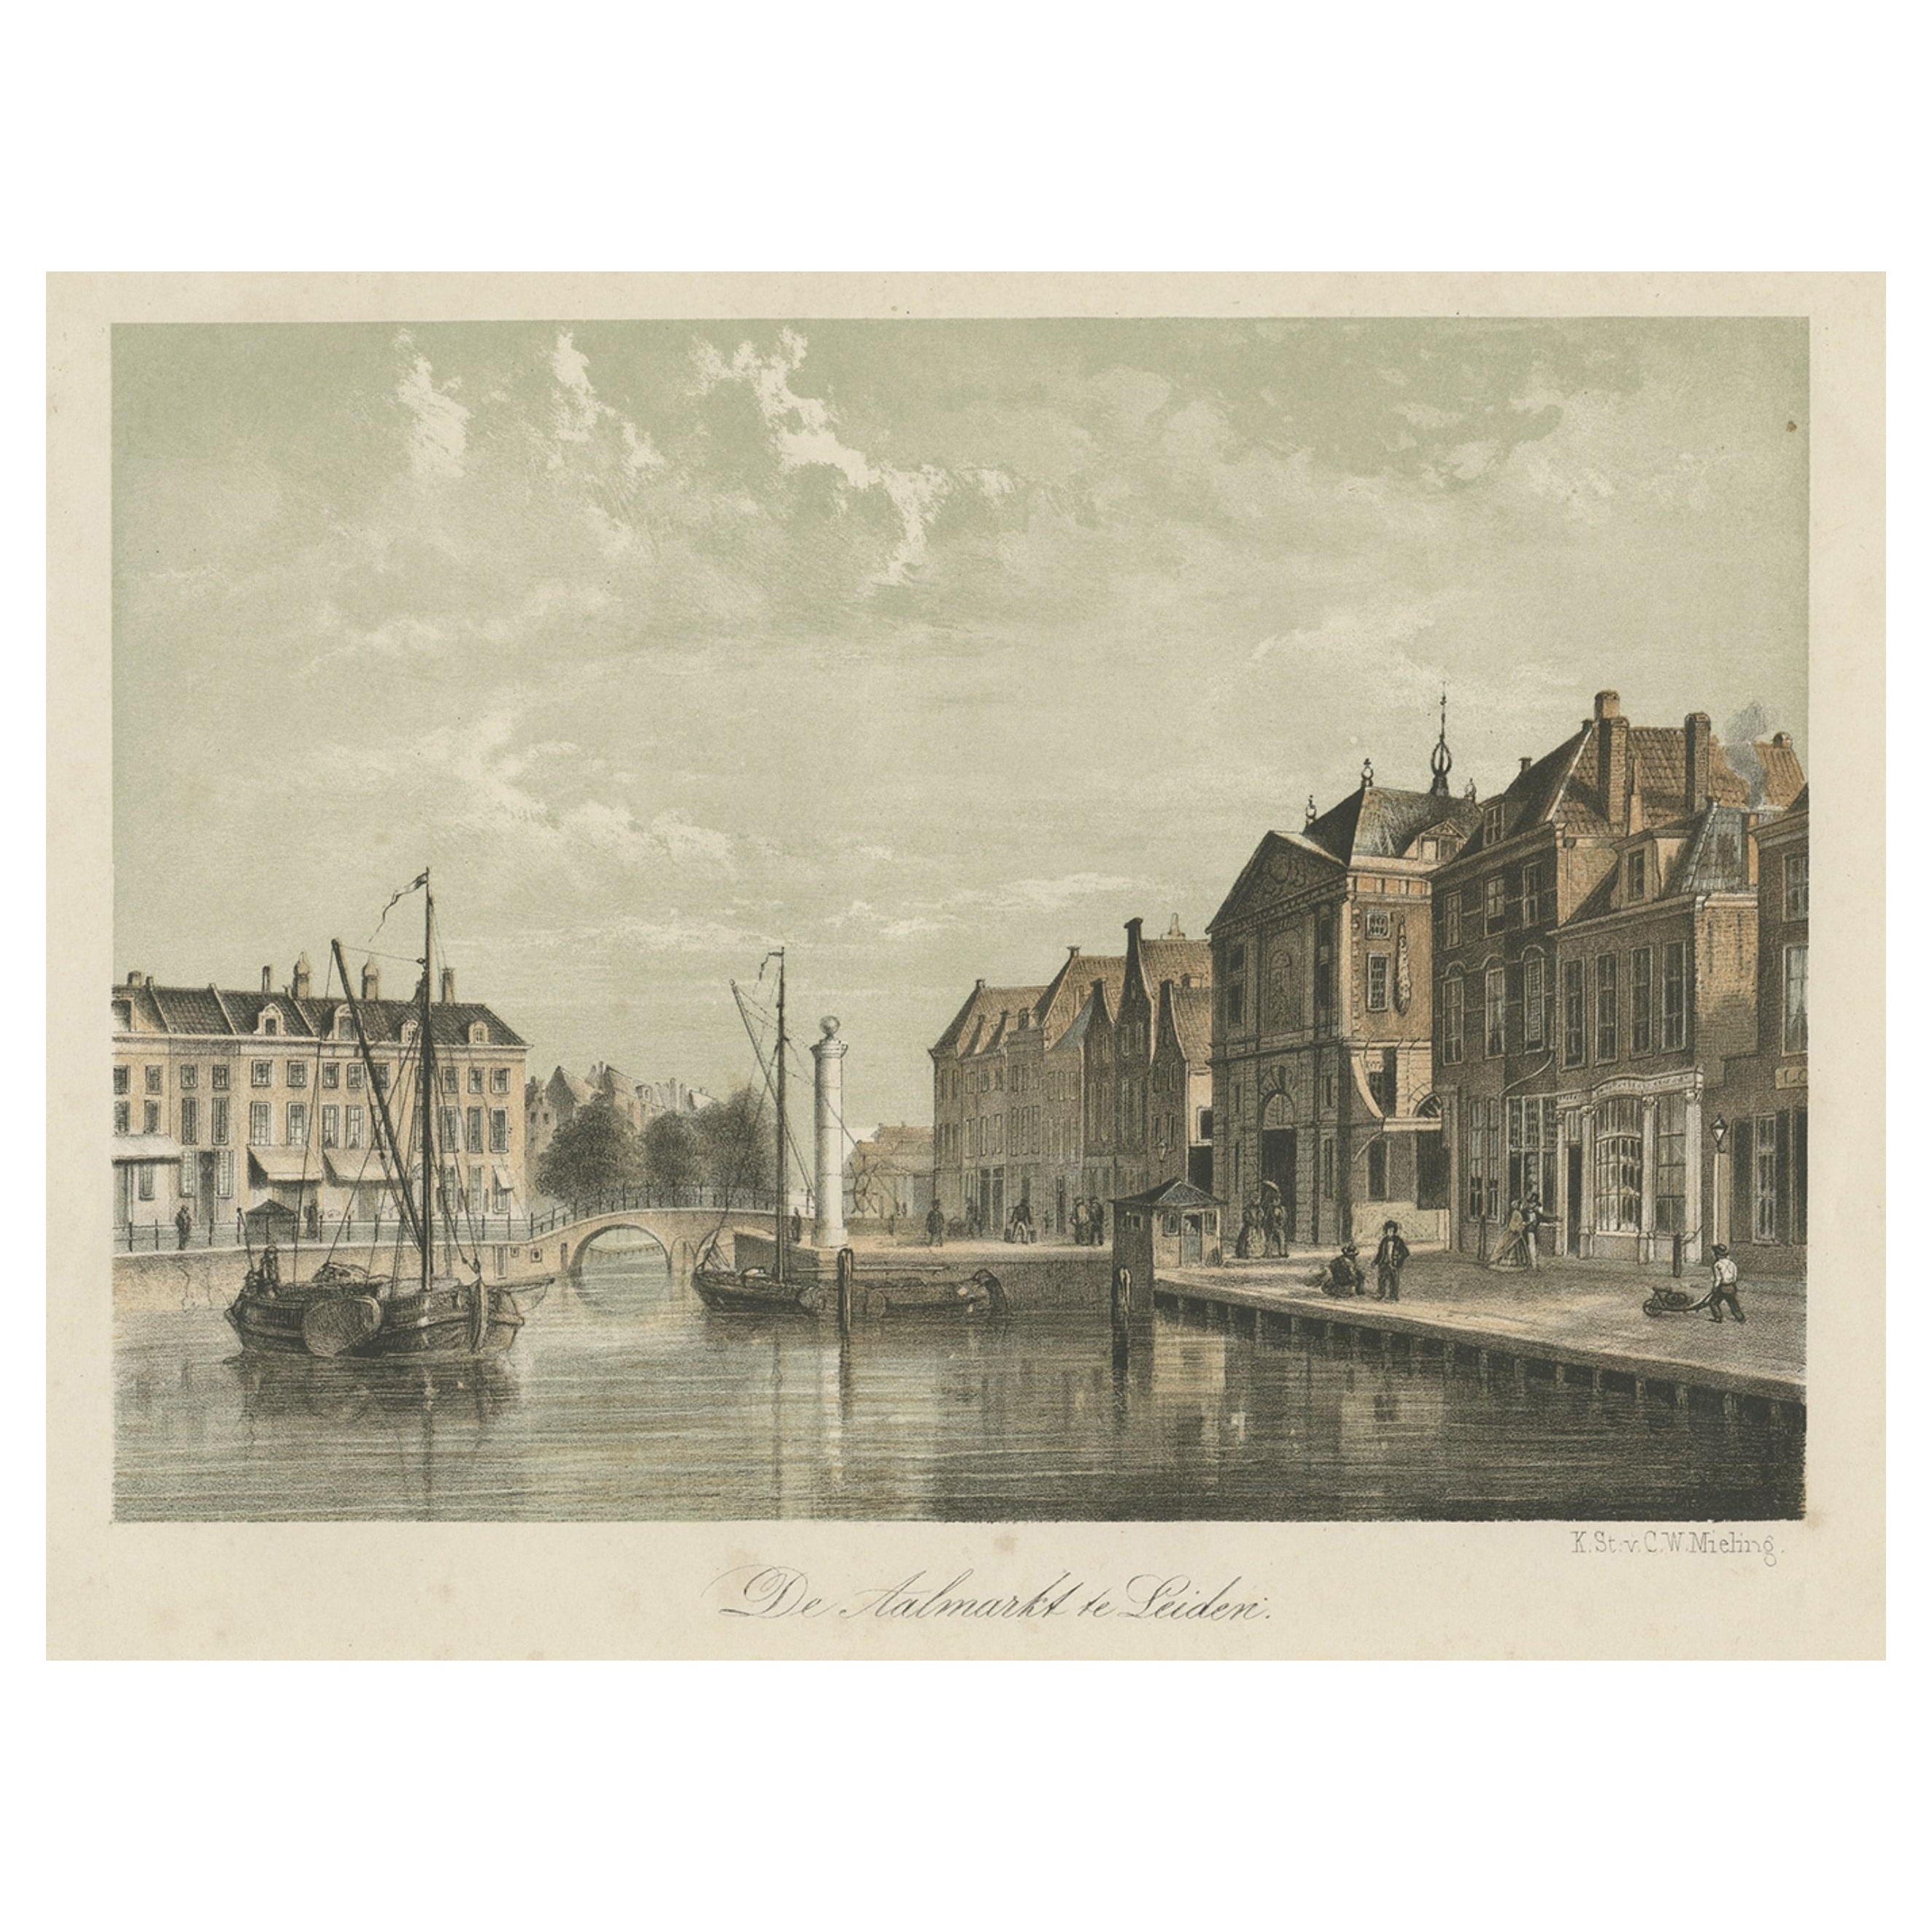 Old Print of the 'Aalmarkt' of Leiden, University City in the Netherlands, 1860